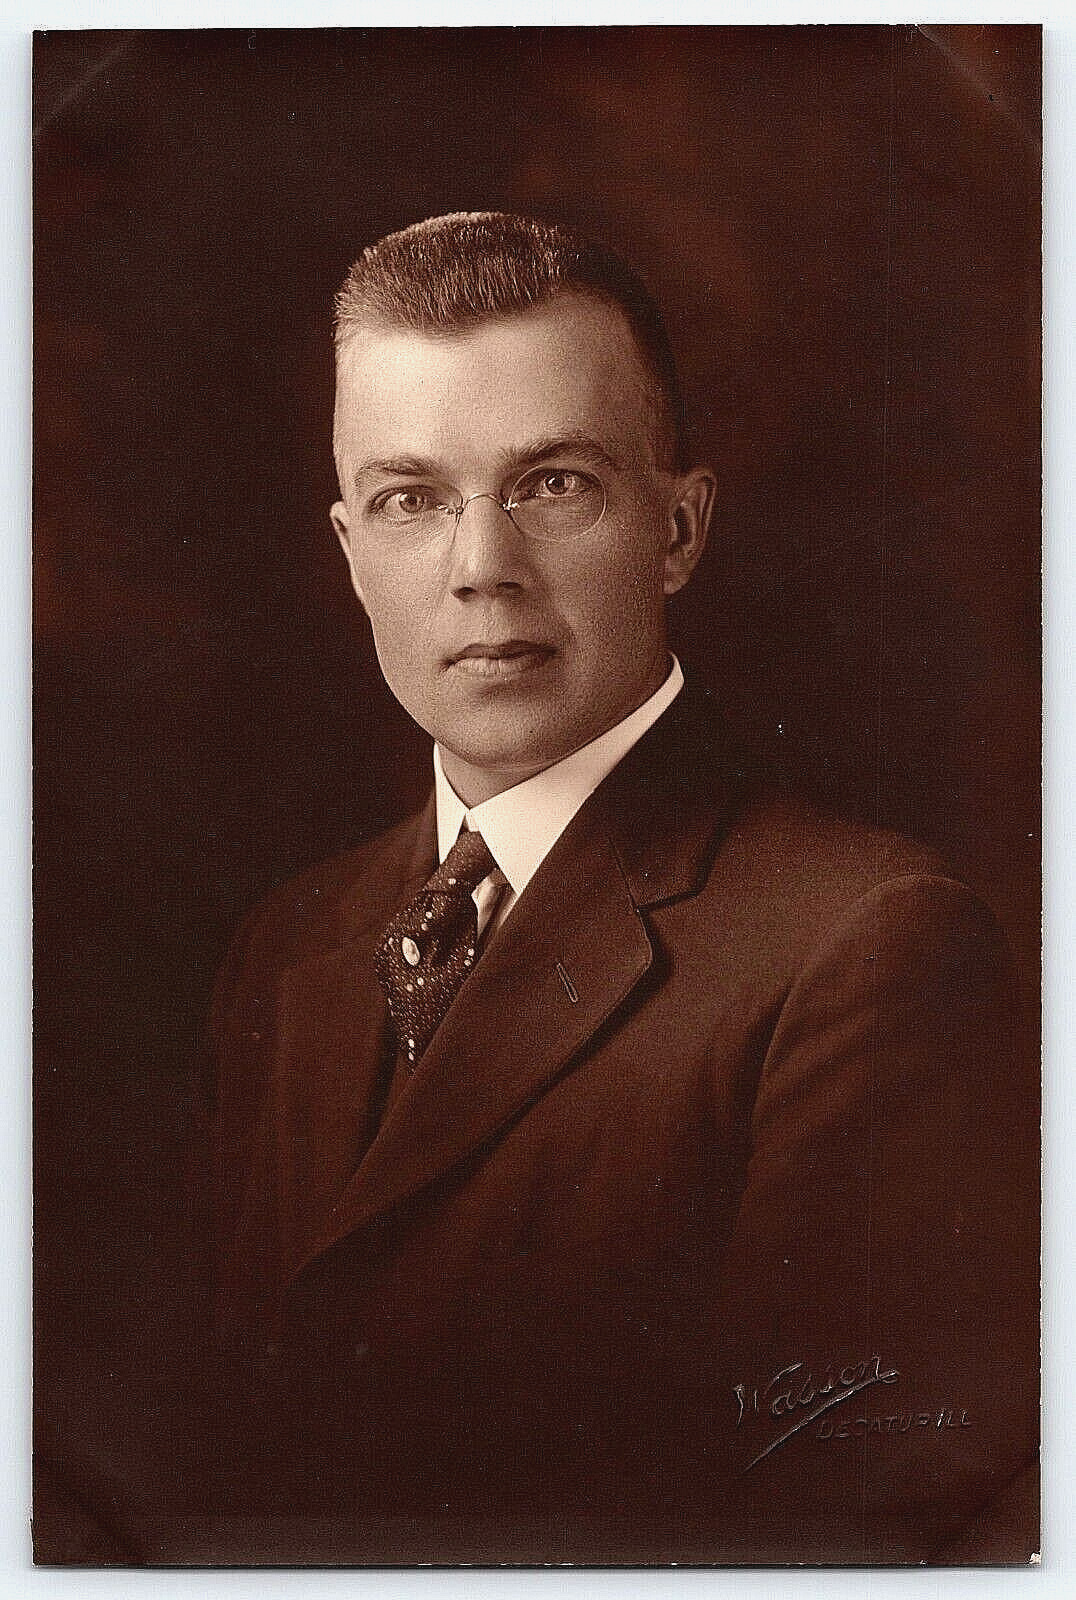 Original Old Vintage Studio Photo Picture Image Gentleman Suit Tie Glasses